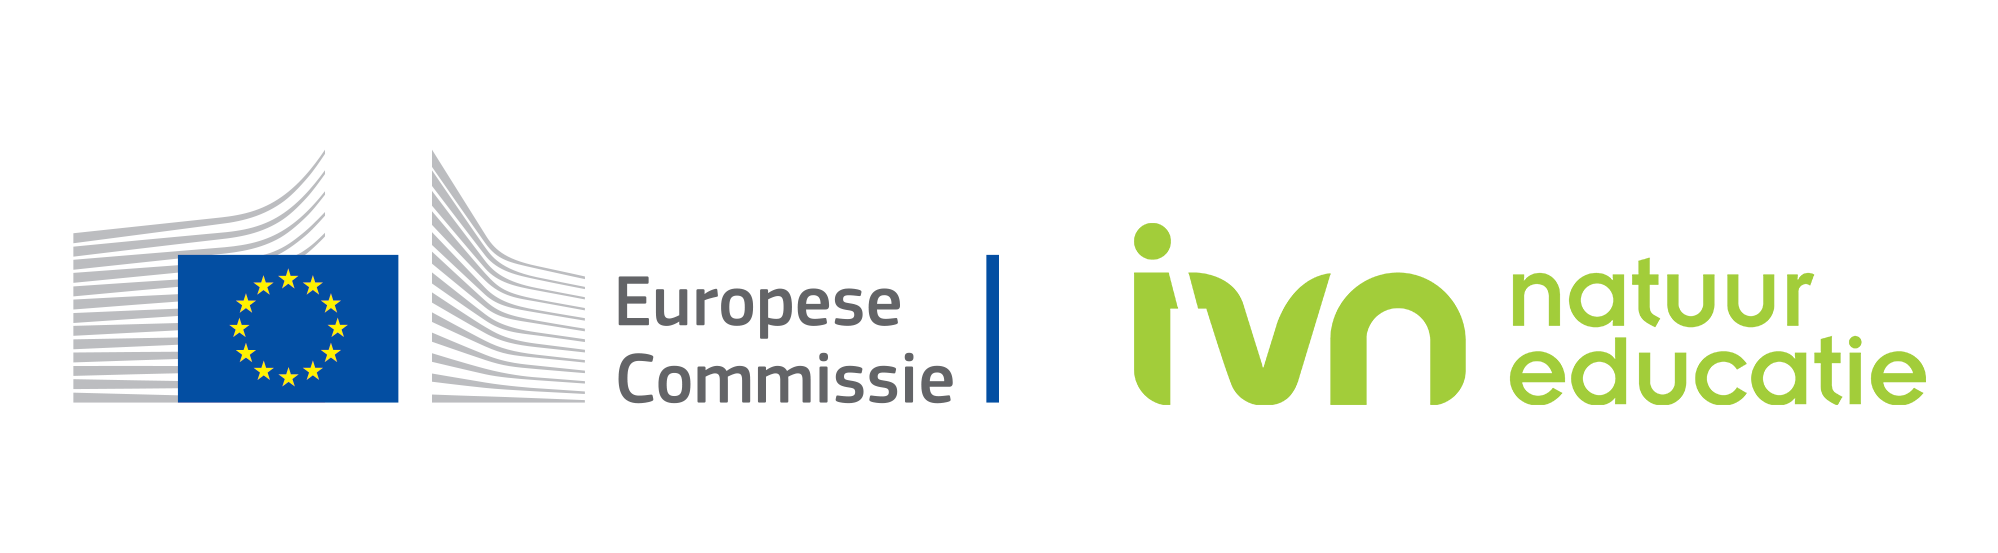 logo's europese commissie en ivn natuureducatie